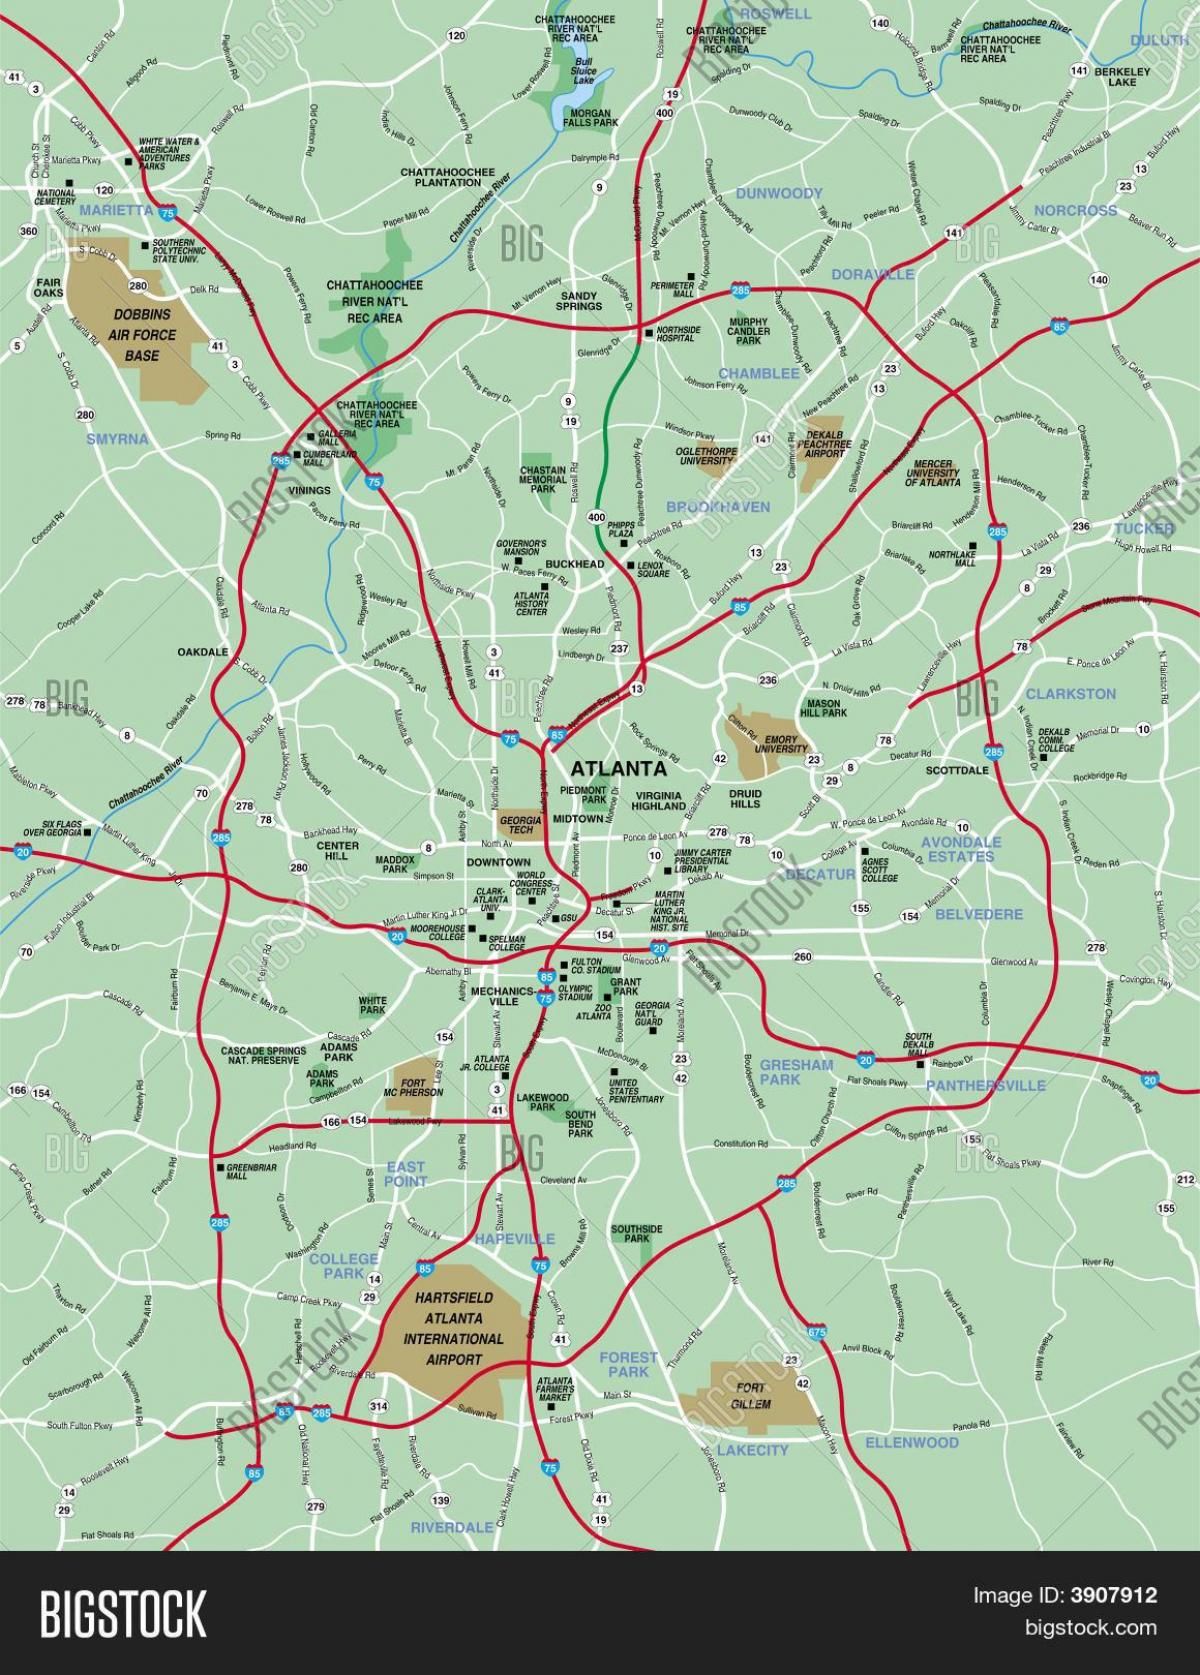 groter Atlanta area map